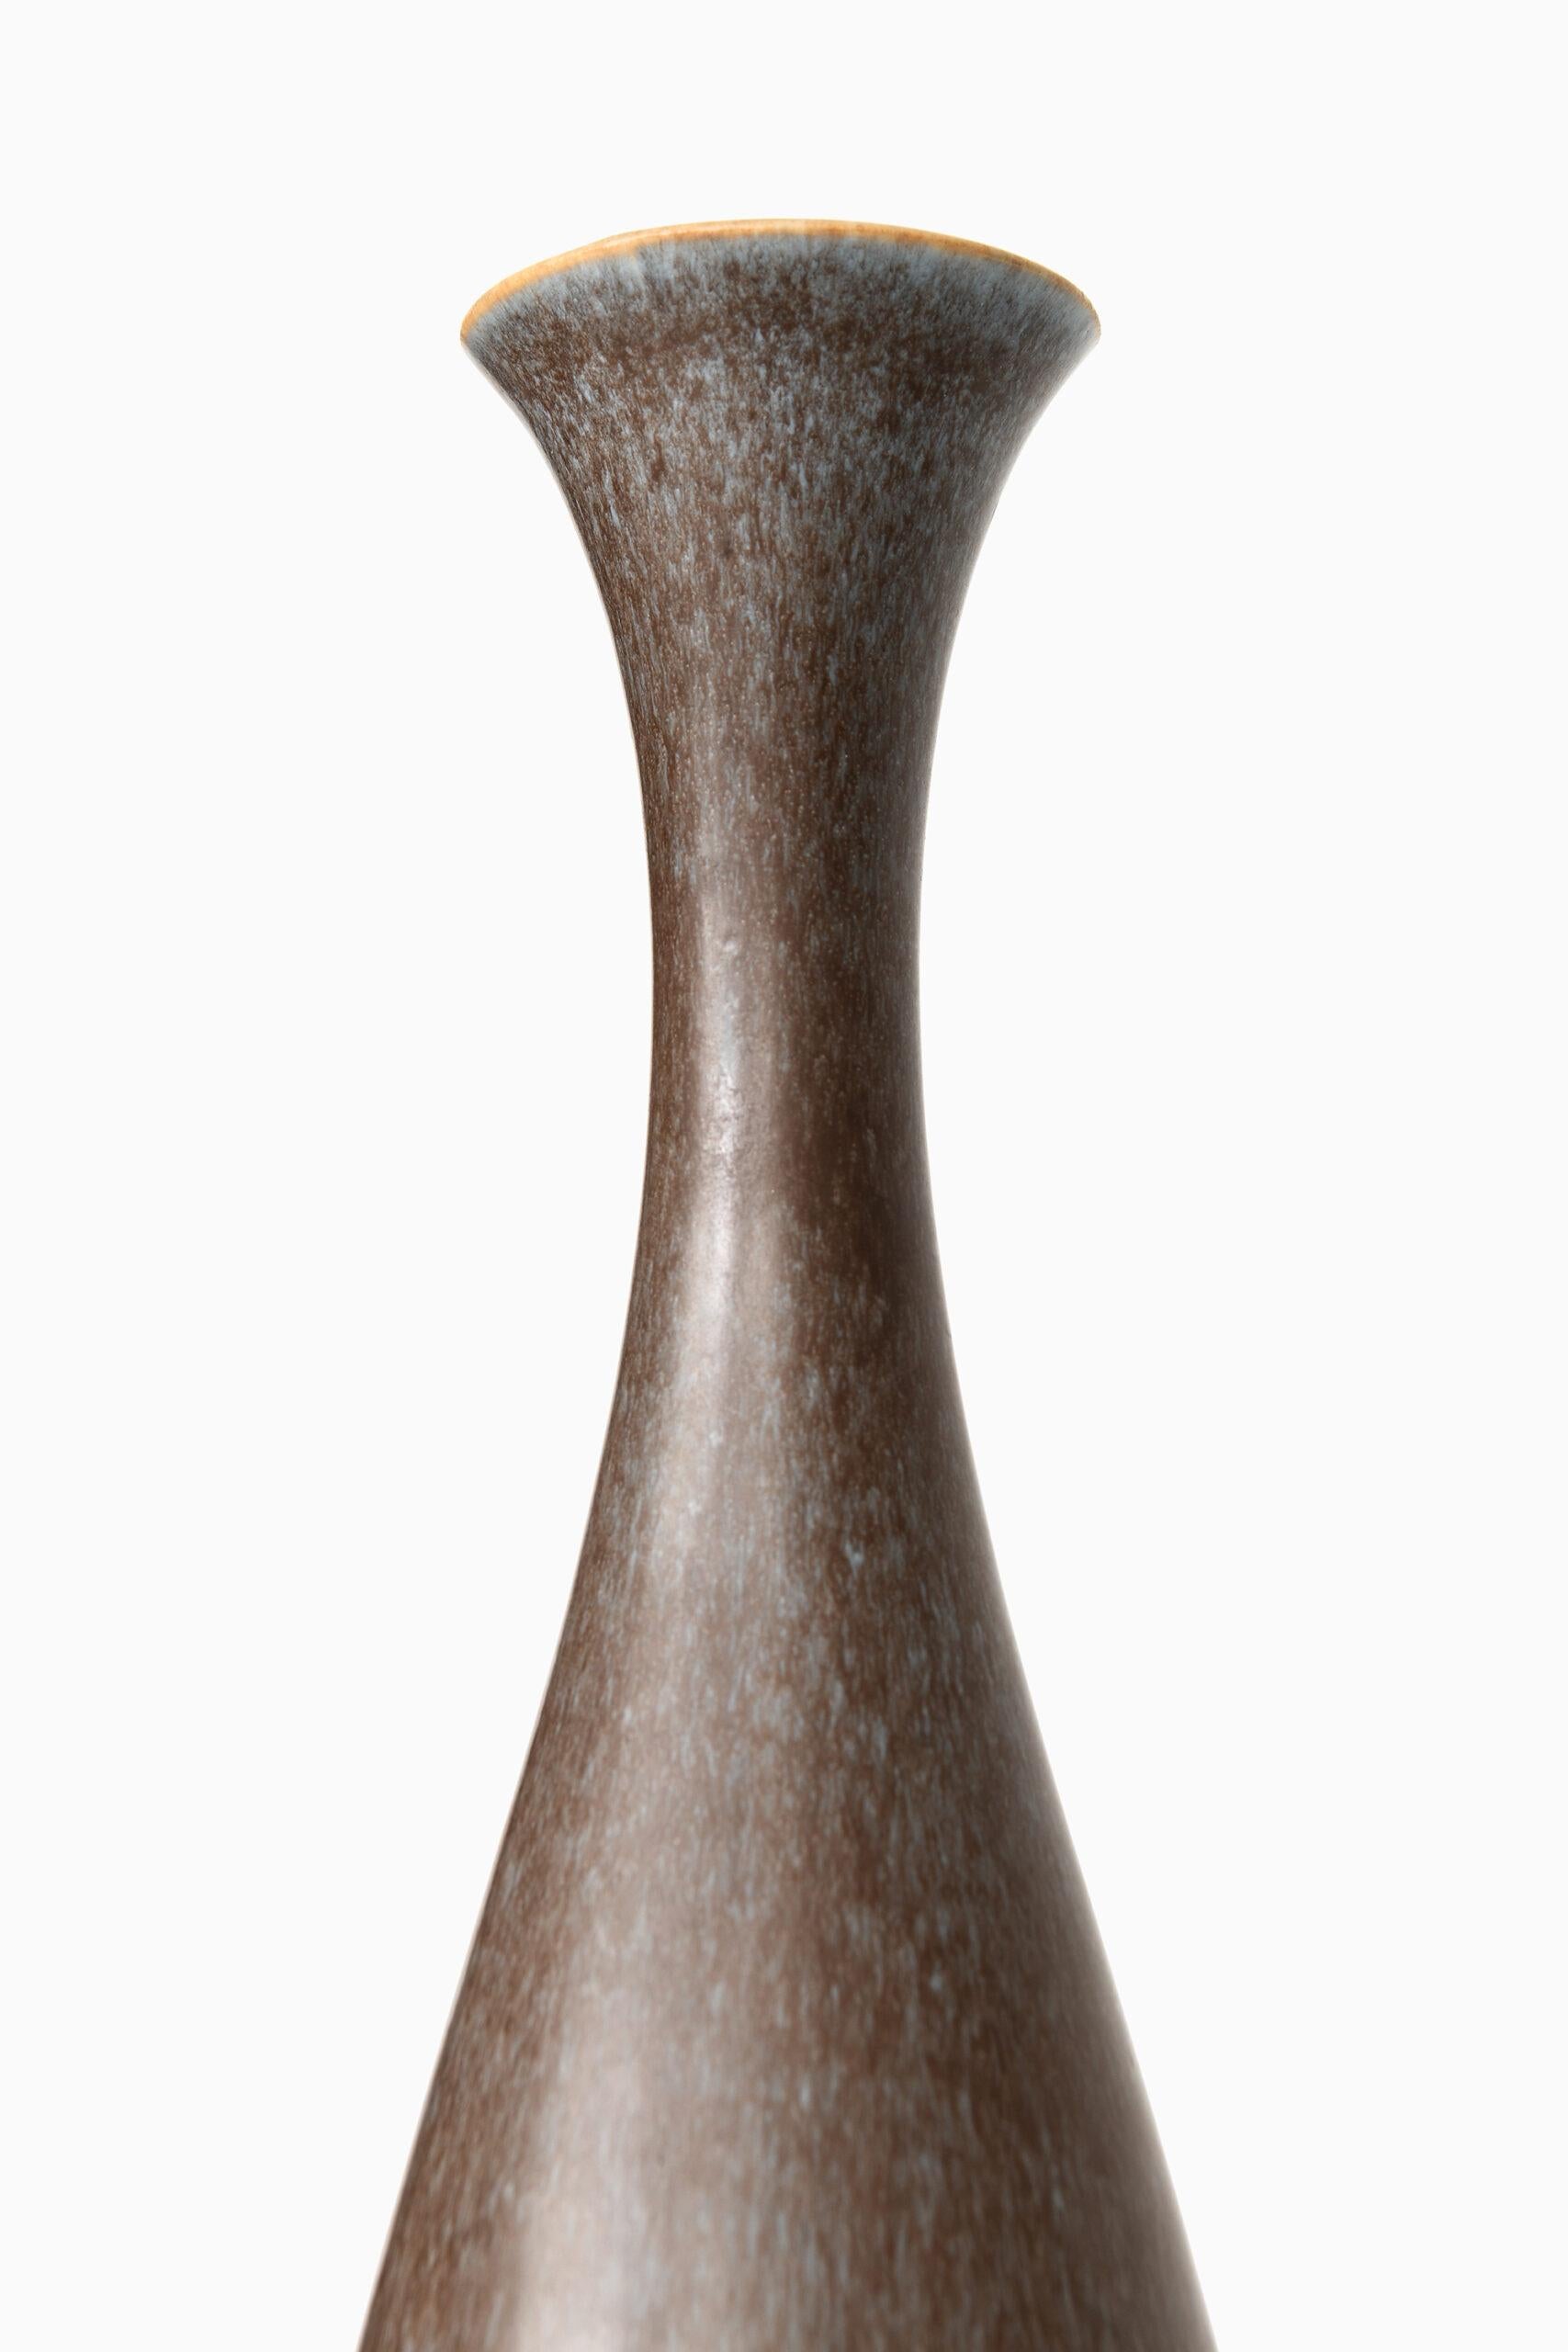 Mid-20th Century Carl-Harry Stålhane Vase Produced by Rörstrand in Sweden